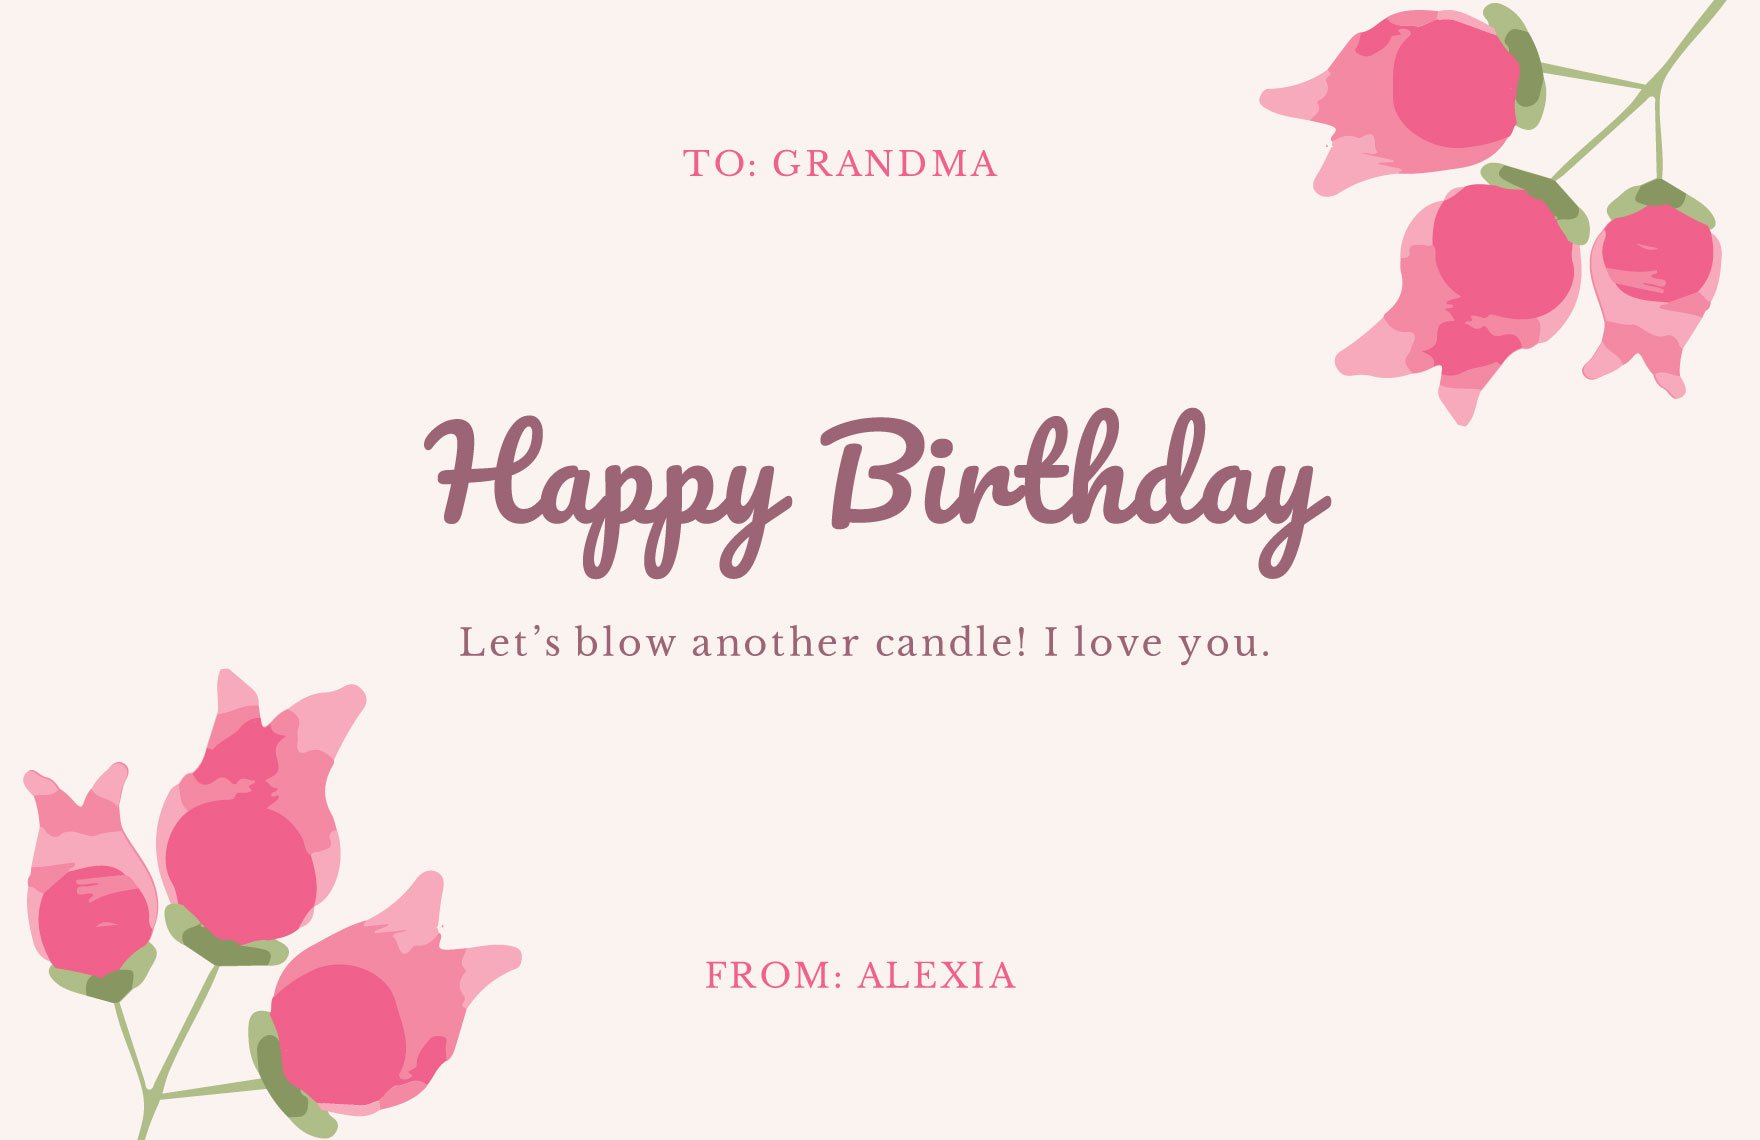 Simple Birthday Card Template For Grandma in Word, Google Docs, Illustrator, PSD